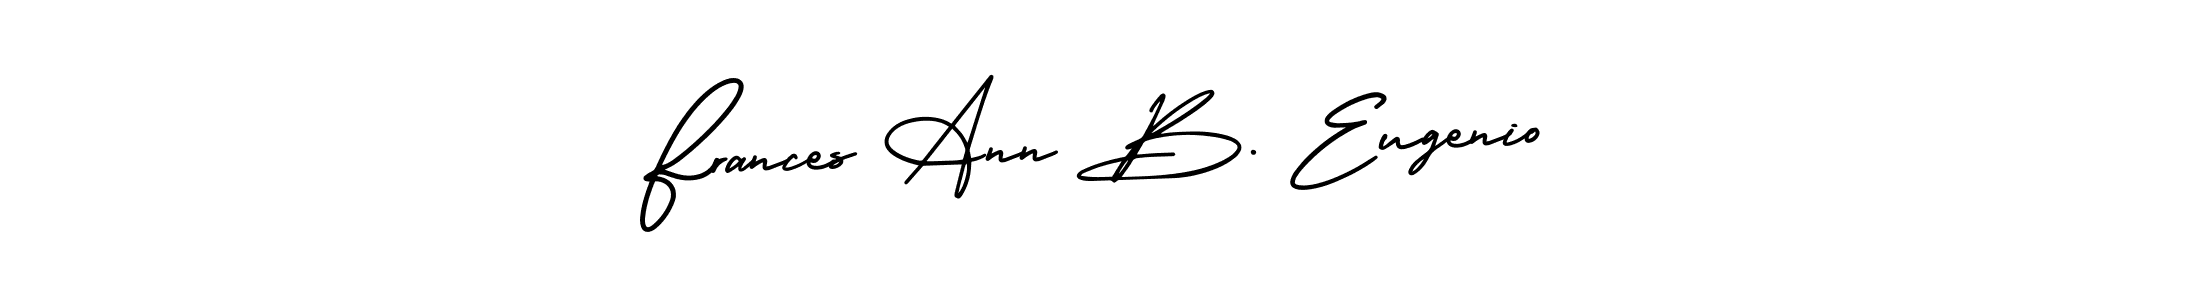 Best and Professional Signature Style for Frances Ann B. Eugenio. AmerikaSignatureDemo-Regular Best Signature Style Collection. Frances Ann B. Eugenio signature style 3 images and pictures png